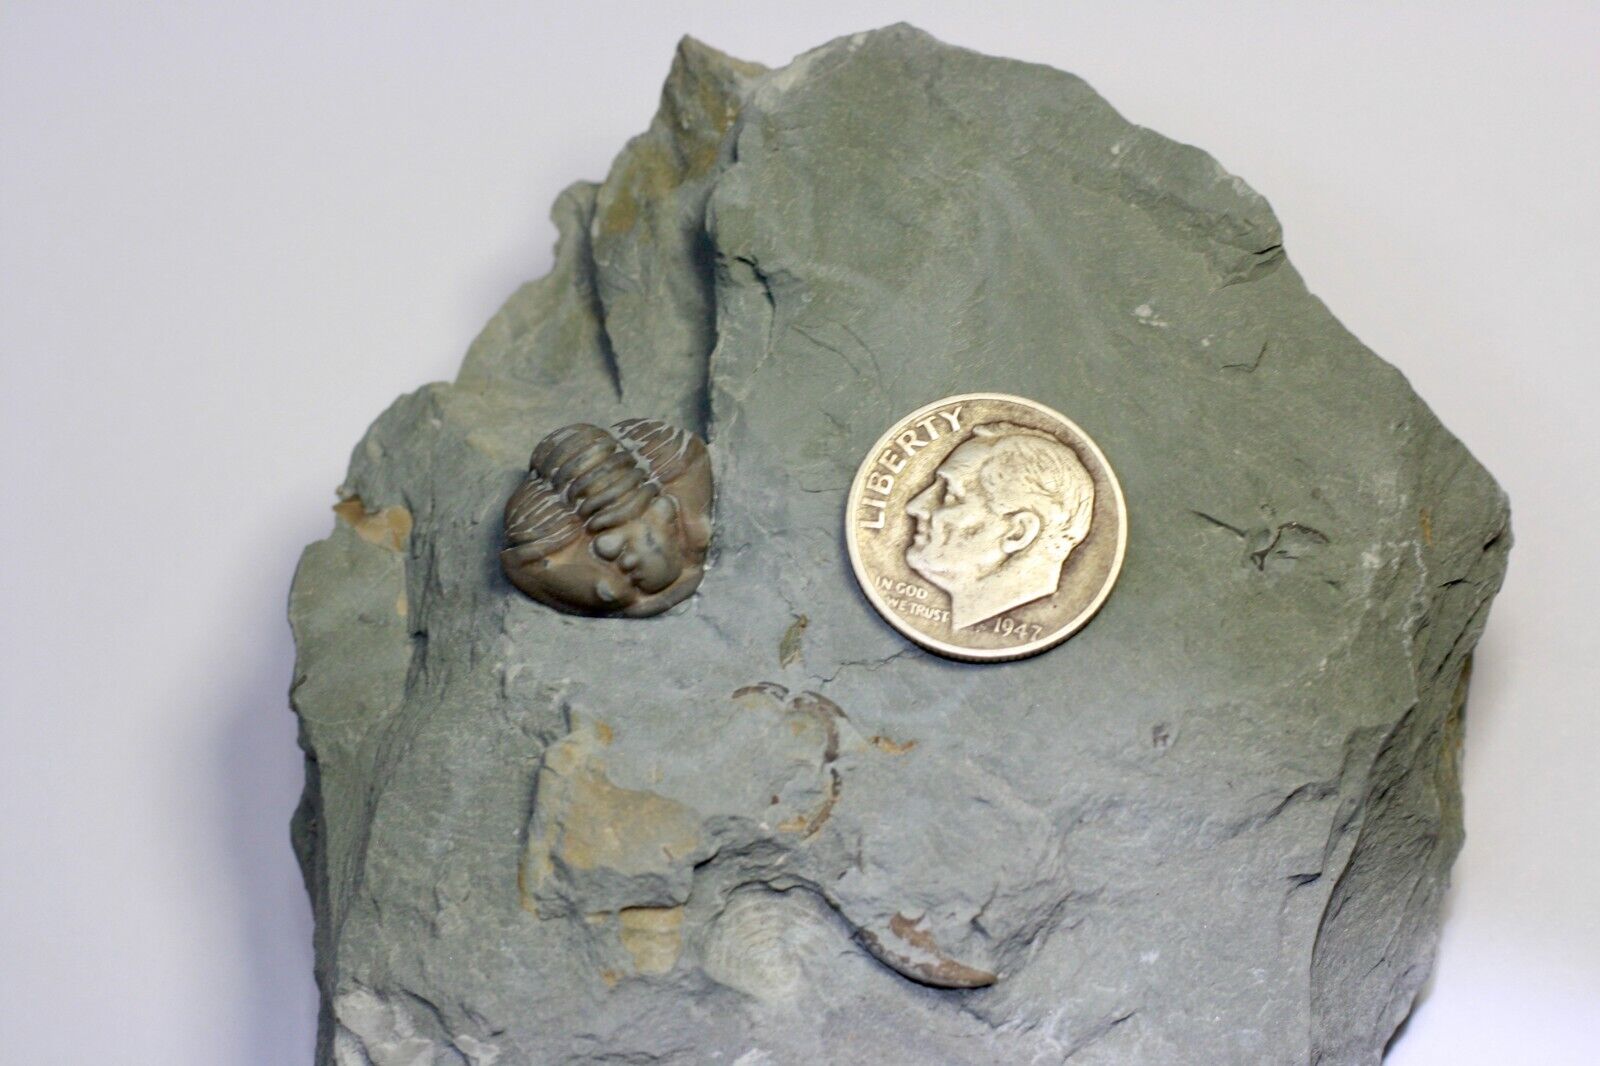 Trilobite Flexicalymene retrorsa from Brown County, Ohio